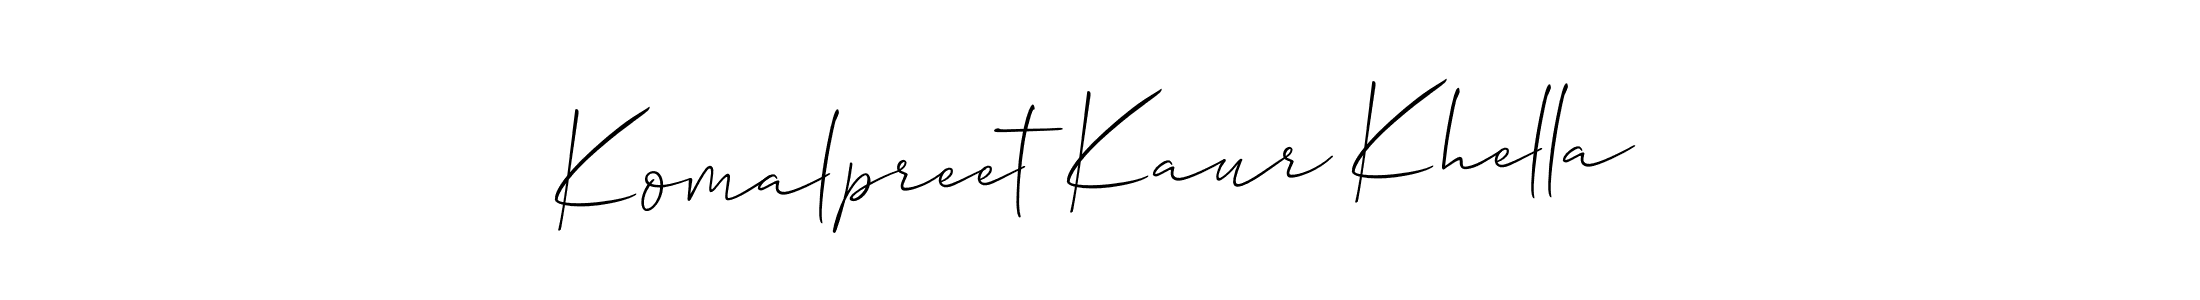 Design your own signature with our free online signature maker. With this signature software, you can create a handwritten (Allison_Script) signature for name Komalpreet Kaur Khella. Komalpreet Kaur Khella signature style 2 images and pictures png